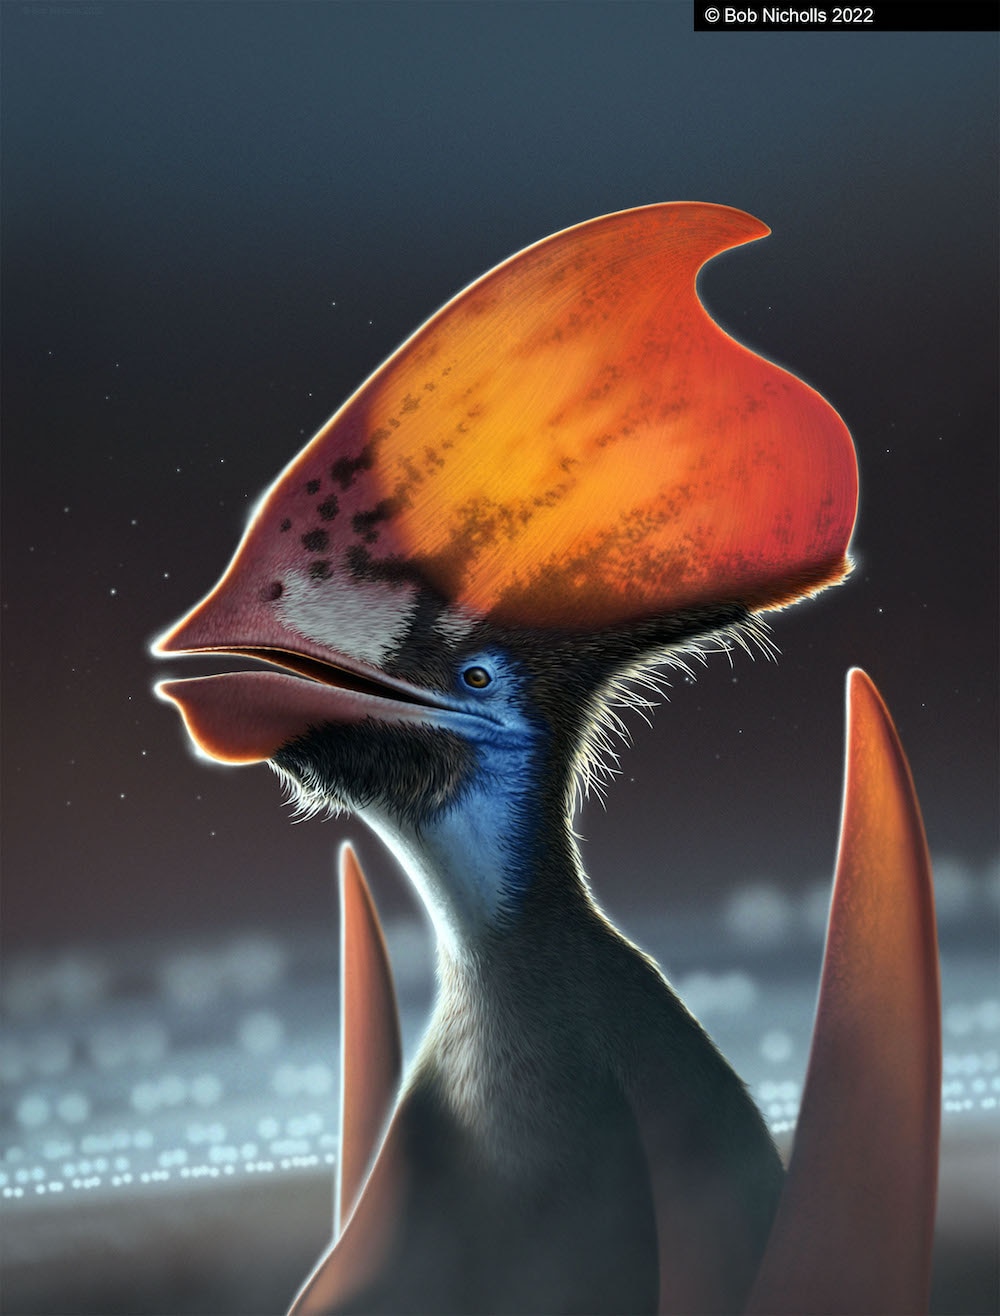 Pterosaur illustration